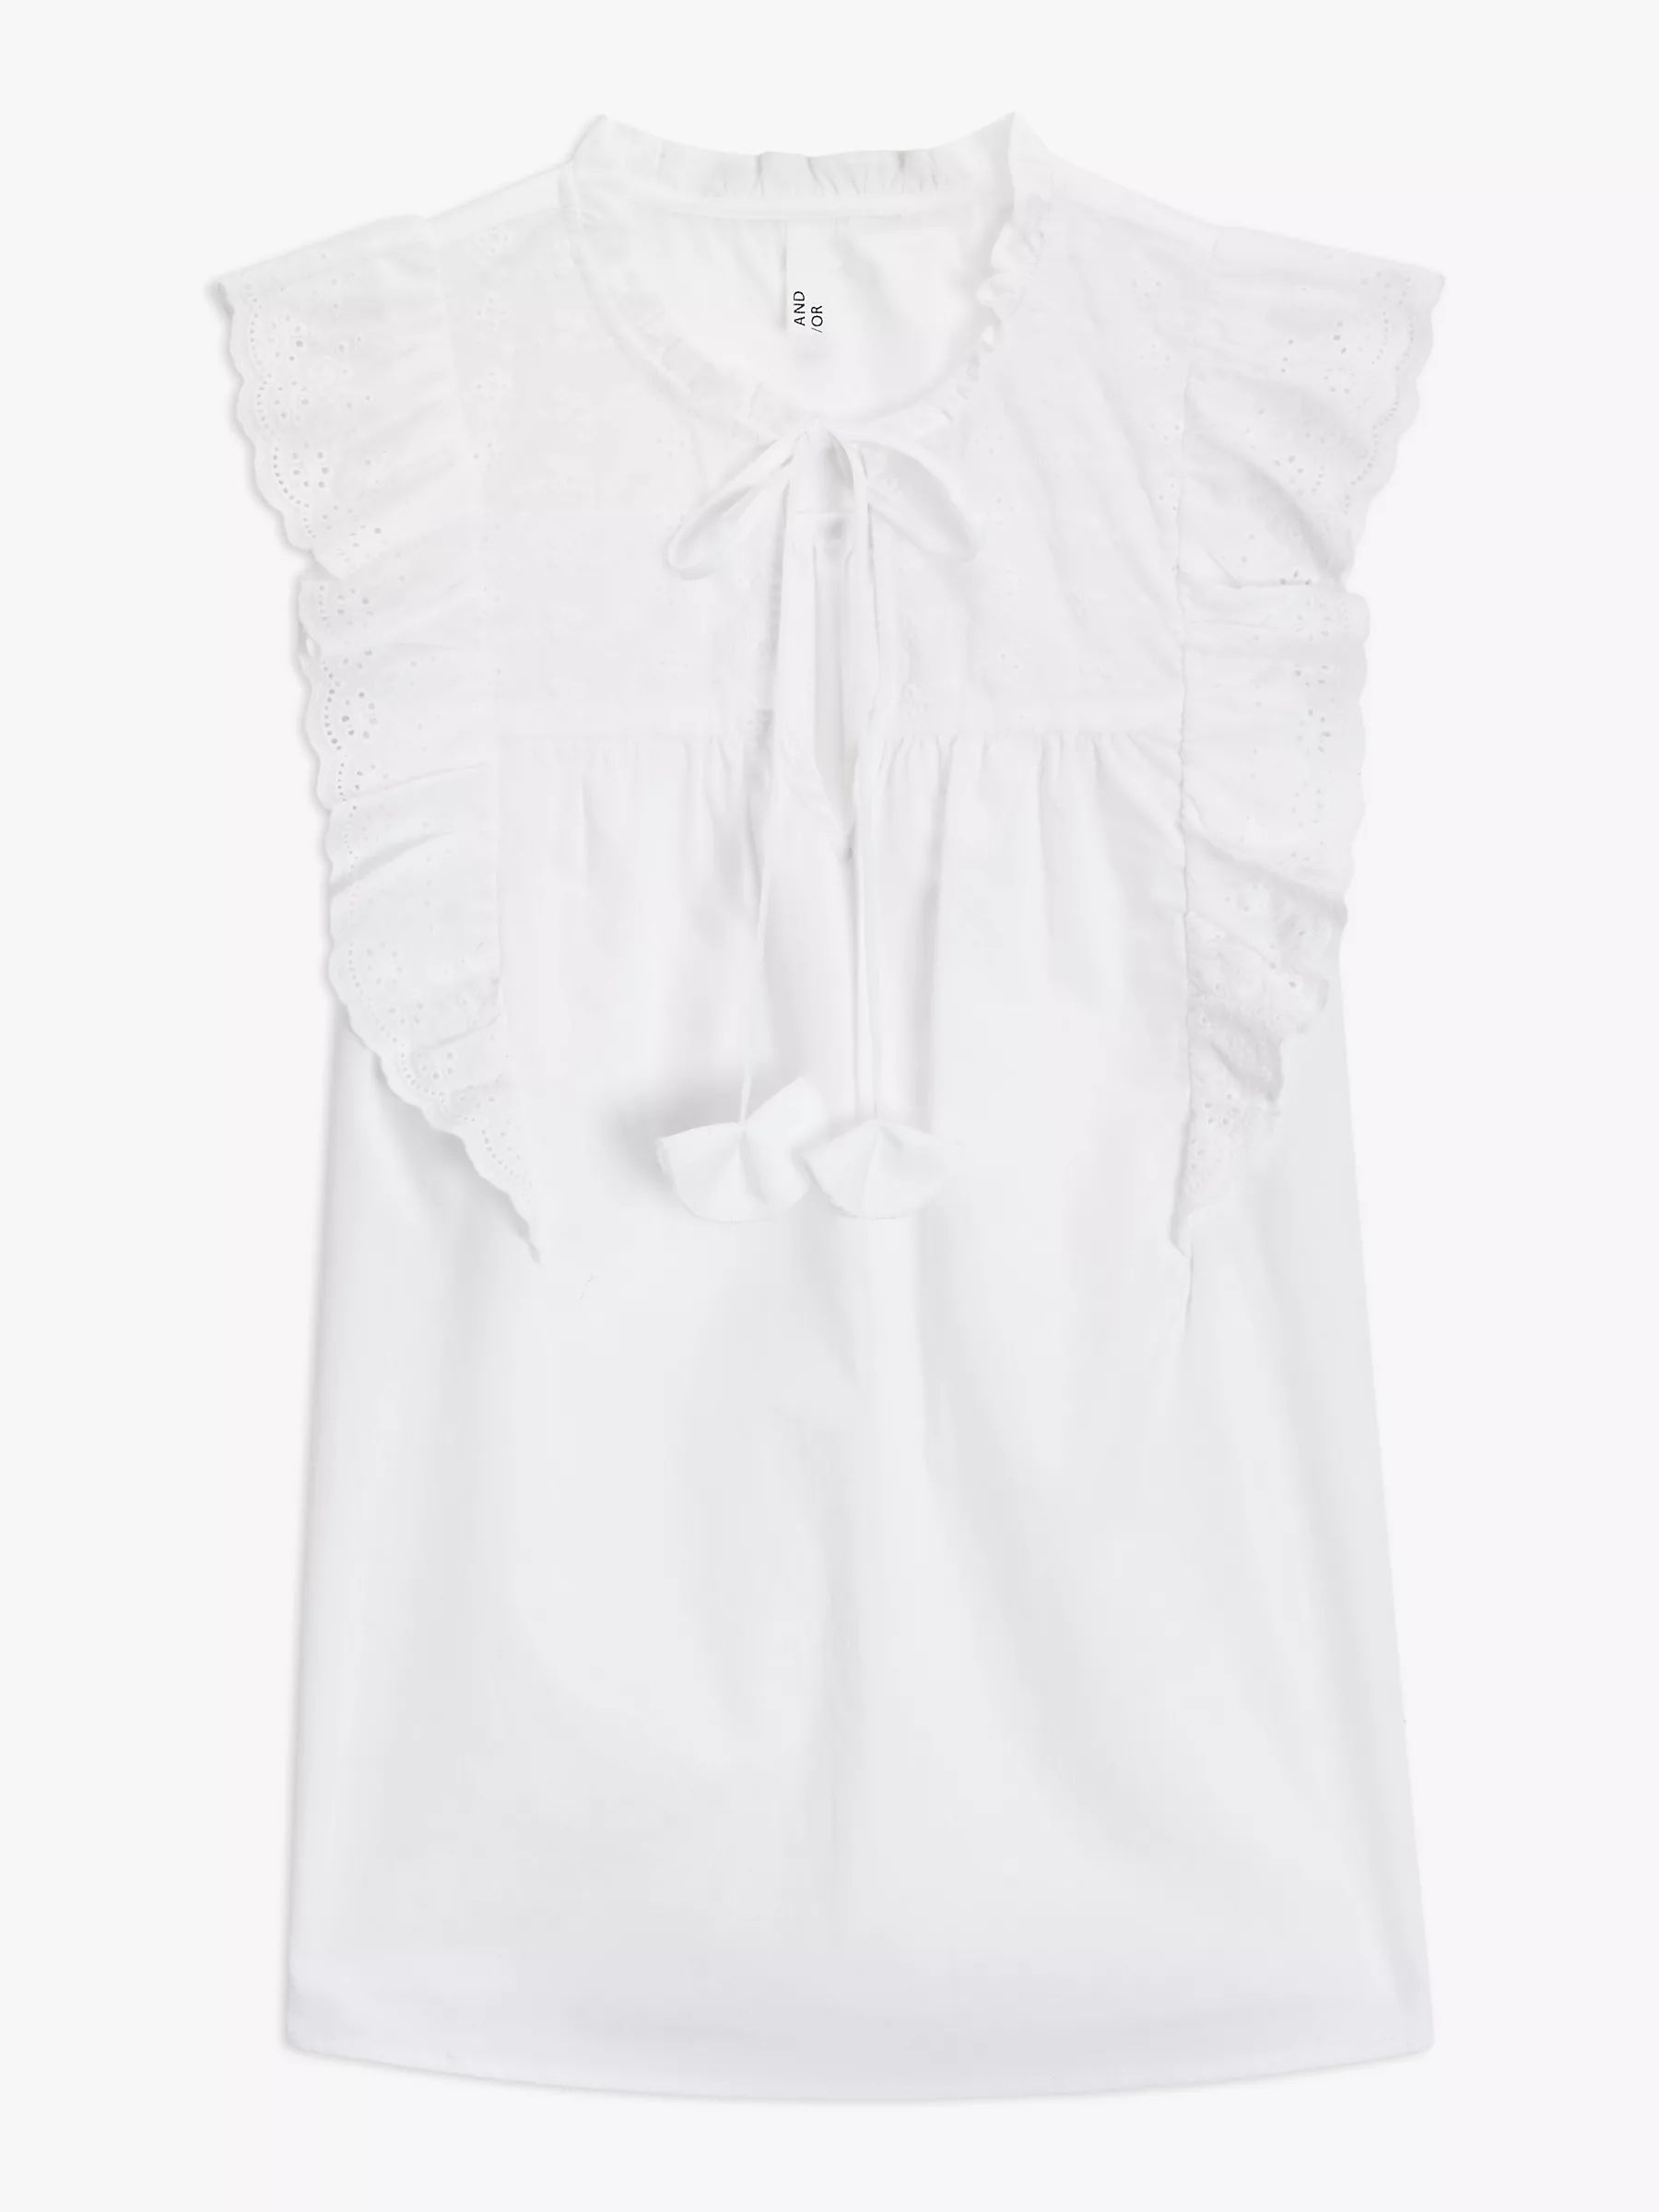 AND/OR Suri Embroidered Blouse, White | John Lewis (UK)